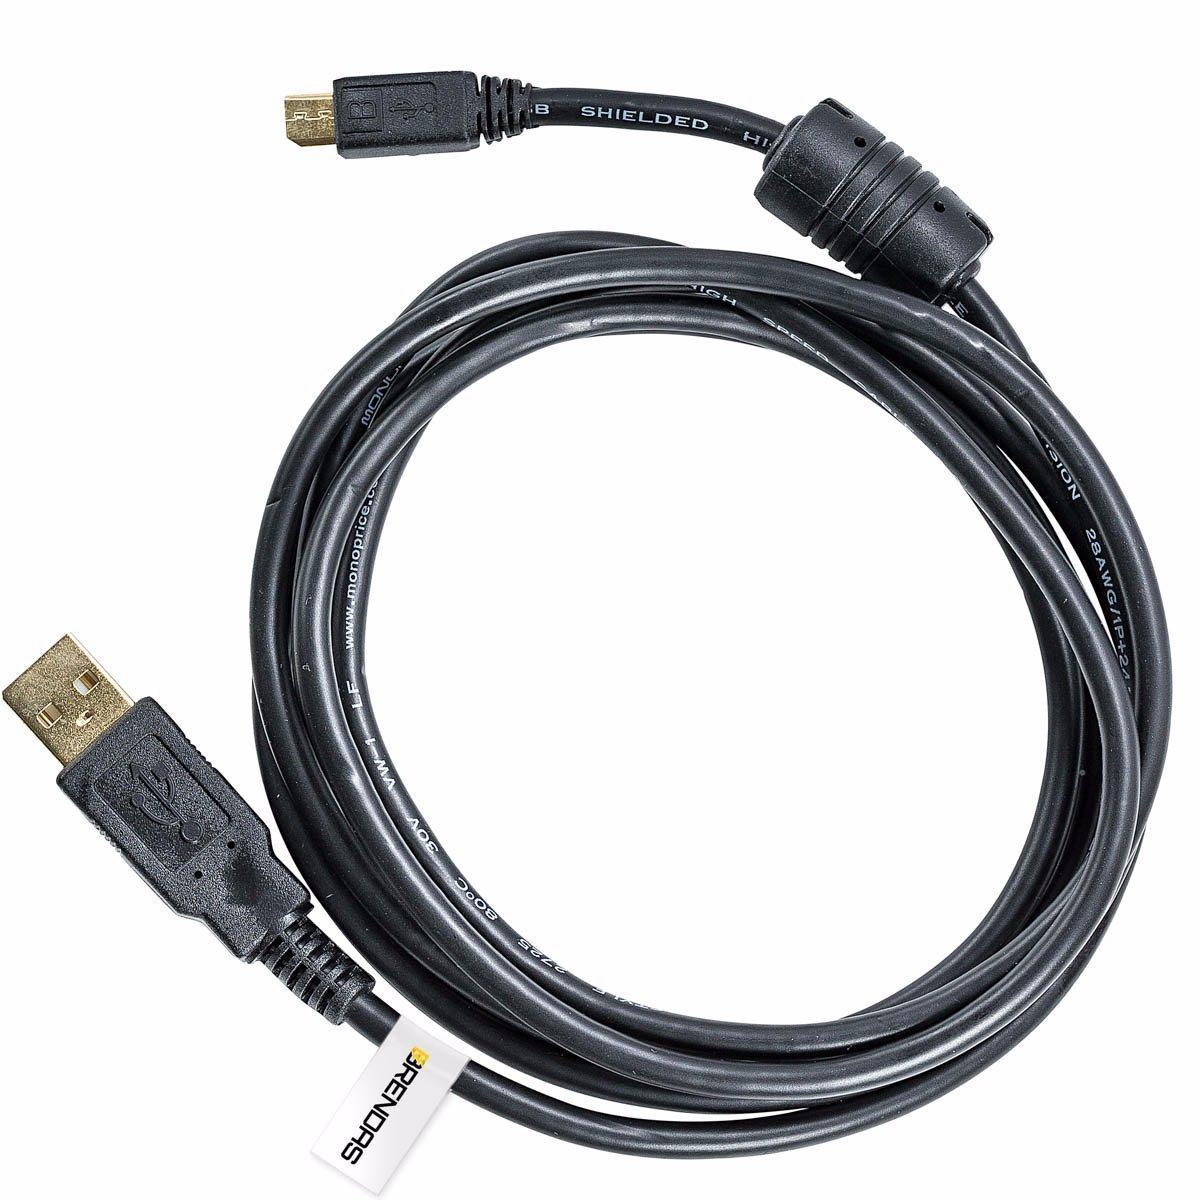 BRENDAZ USB Cable Mini-B 8 Pin Compatible with Nikon D3200 D5200 D5000  D5100 D5200 D5500